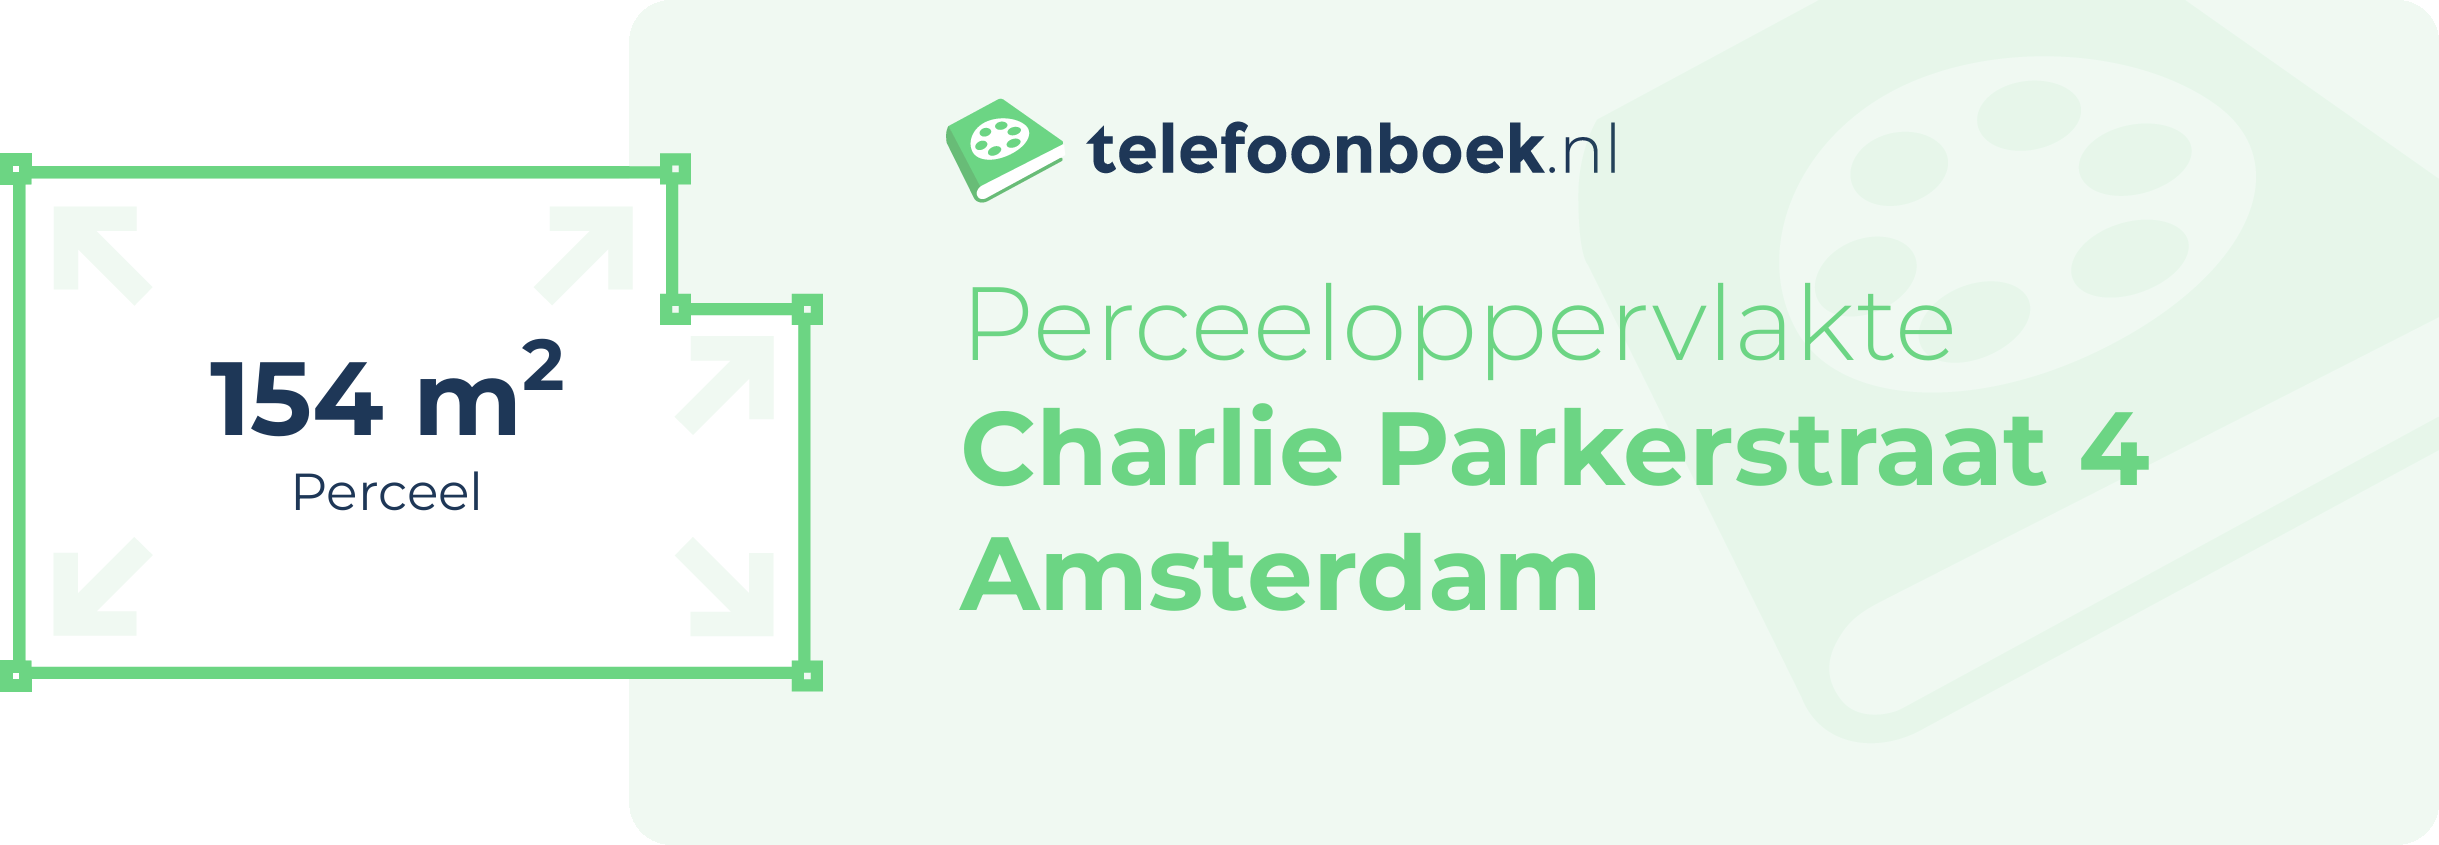 Perceeloppervlakte Charlie Parkerstraat 4 Amsterdam